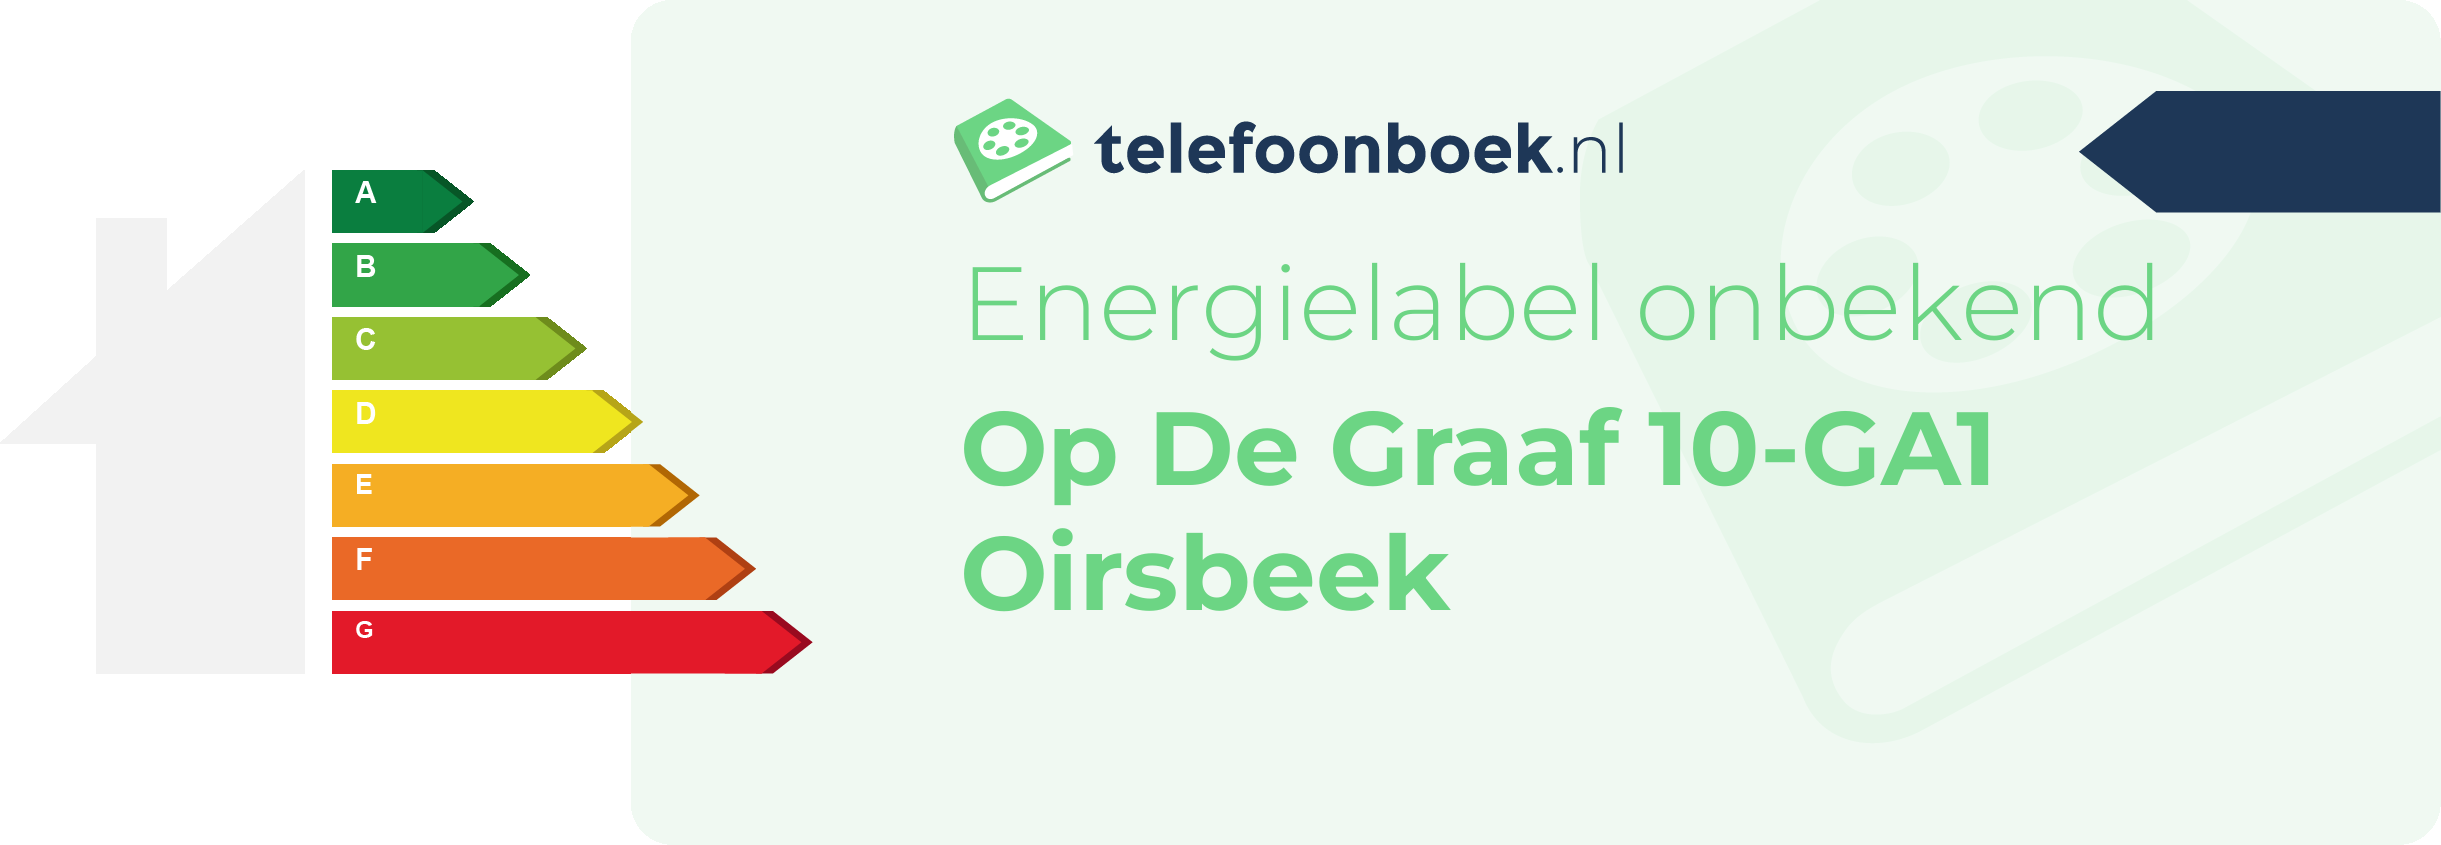 Energielabel Op De Graaf 10-GA1 Oirsbeek